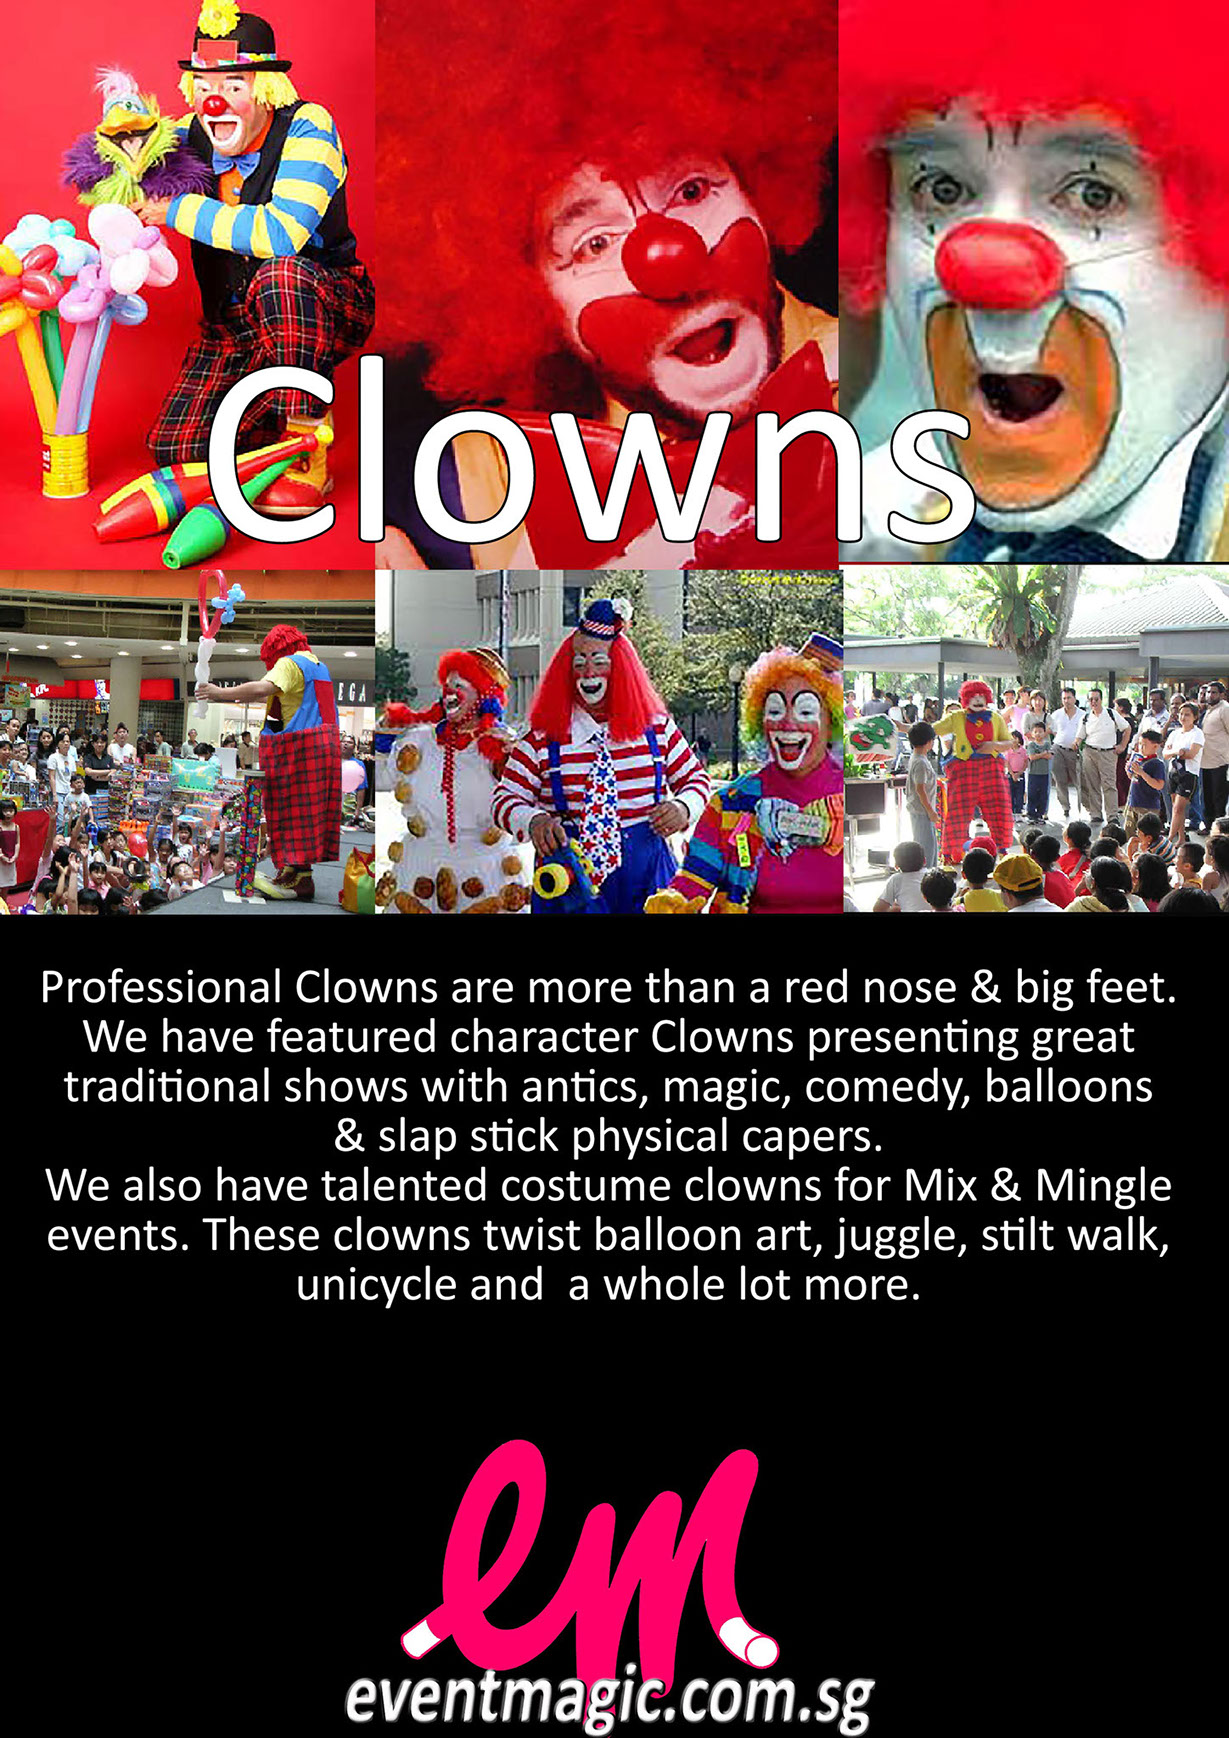 Clown for hire Singapore, Clowns, Clowning Singapore, eventmagic.com.sg Clowns Clowning